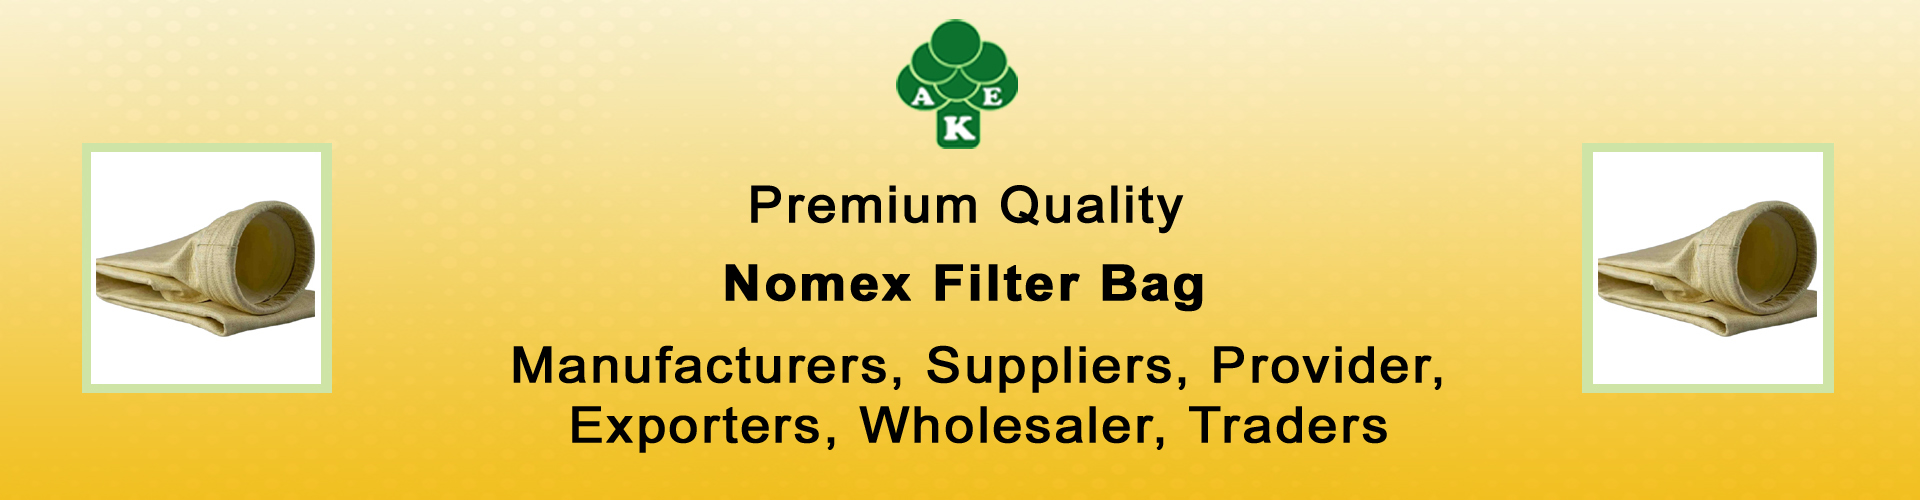 Nomex Filter Bag